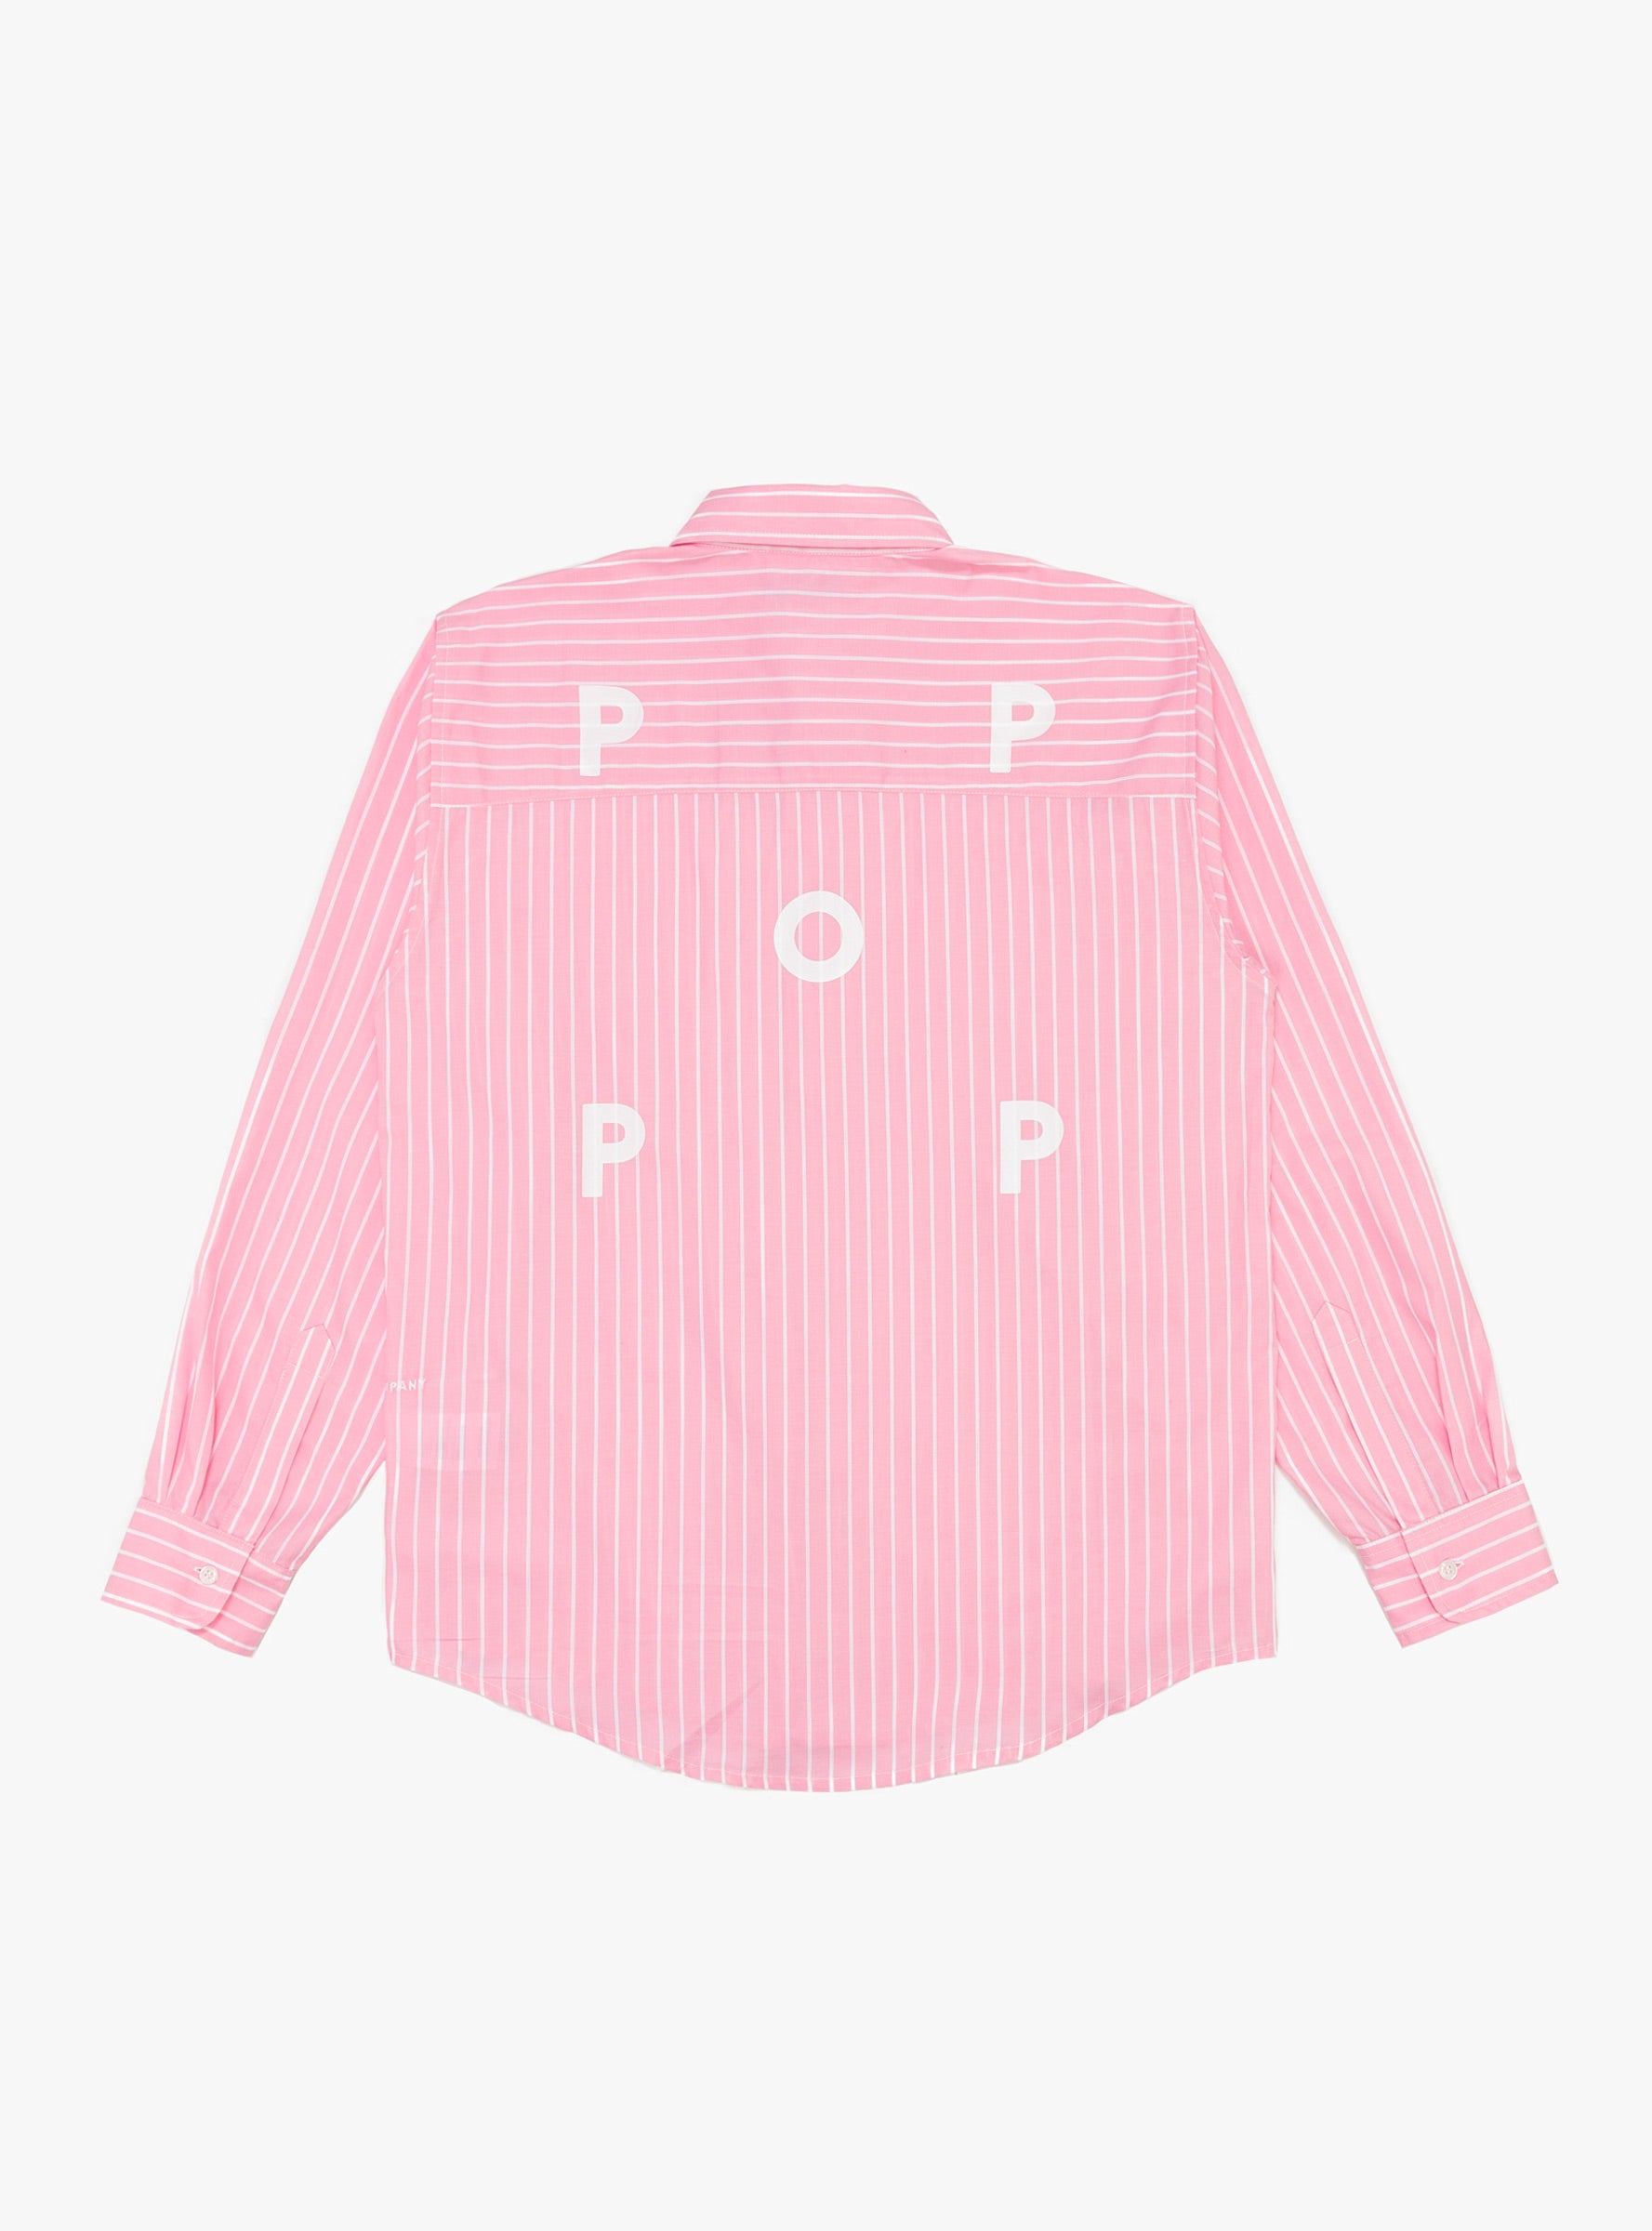 Pop Trading Company Pop Trading Company Logo Striped Shirt Pink - Size: Medium